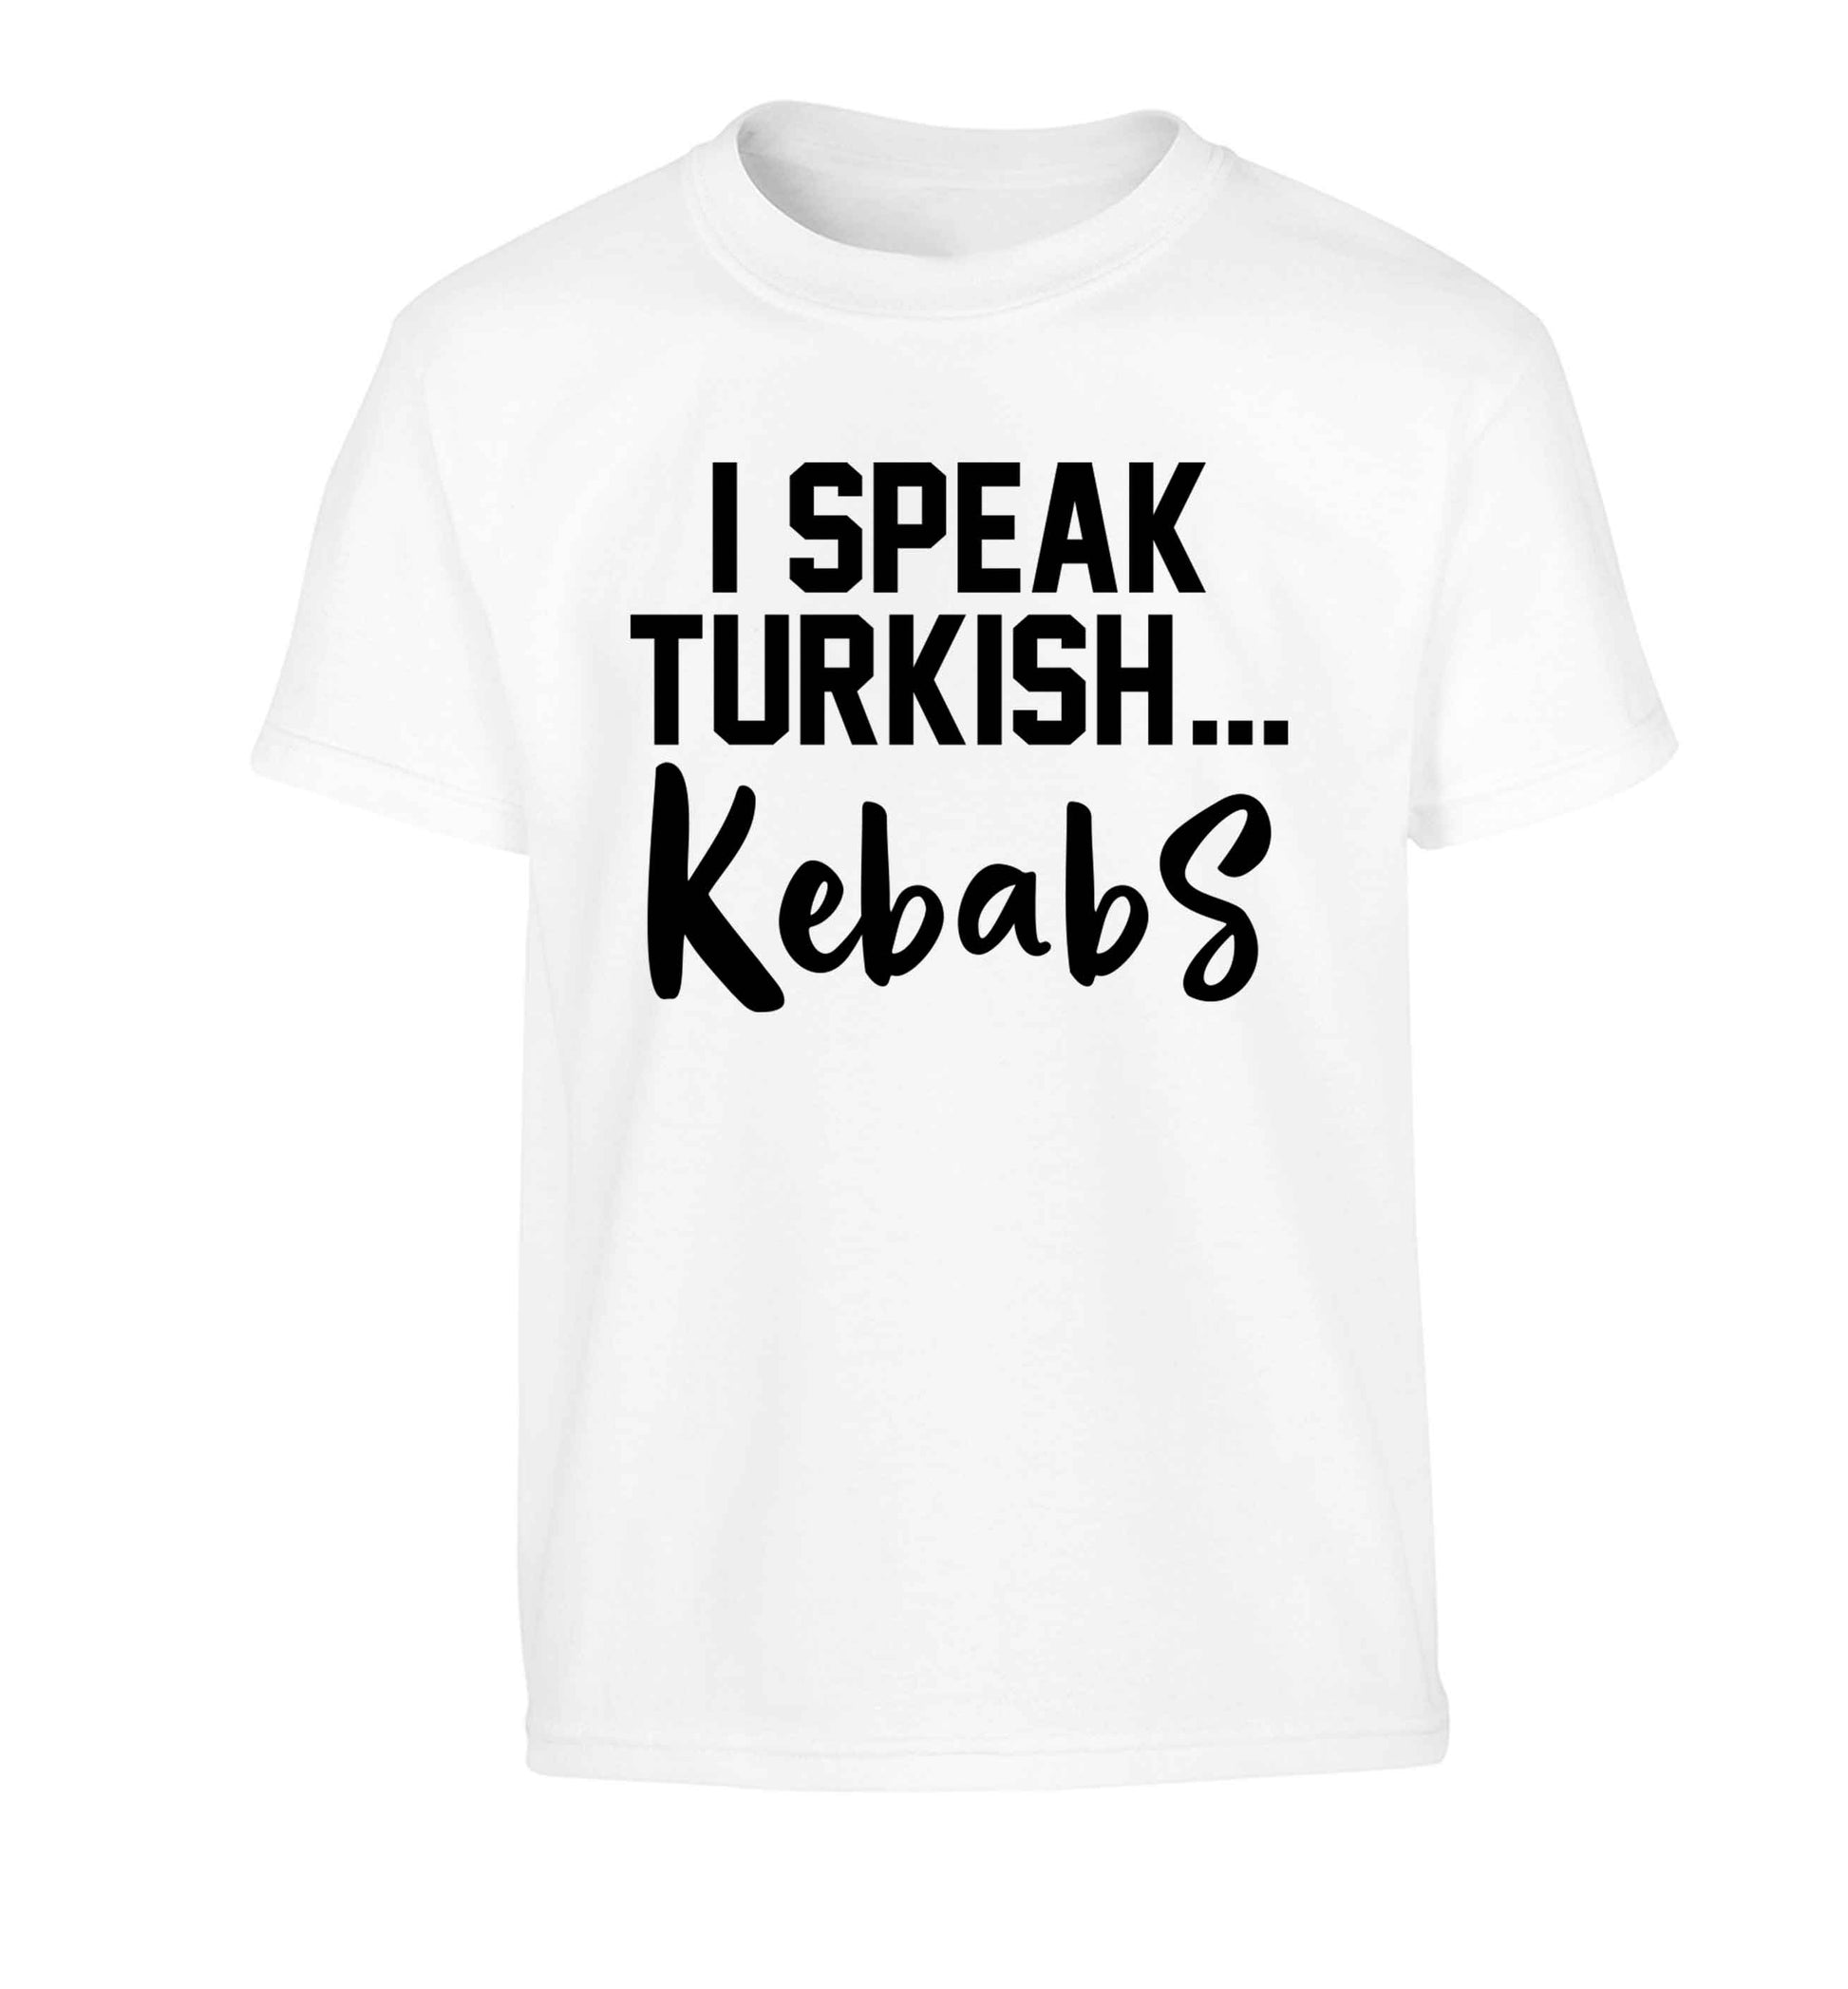 I speak Turkish...kebabs Children's white Tshirt 12-13 Years